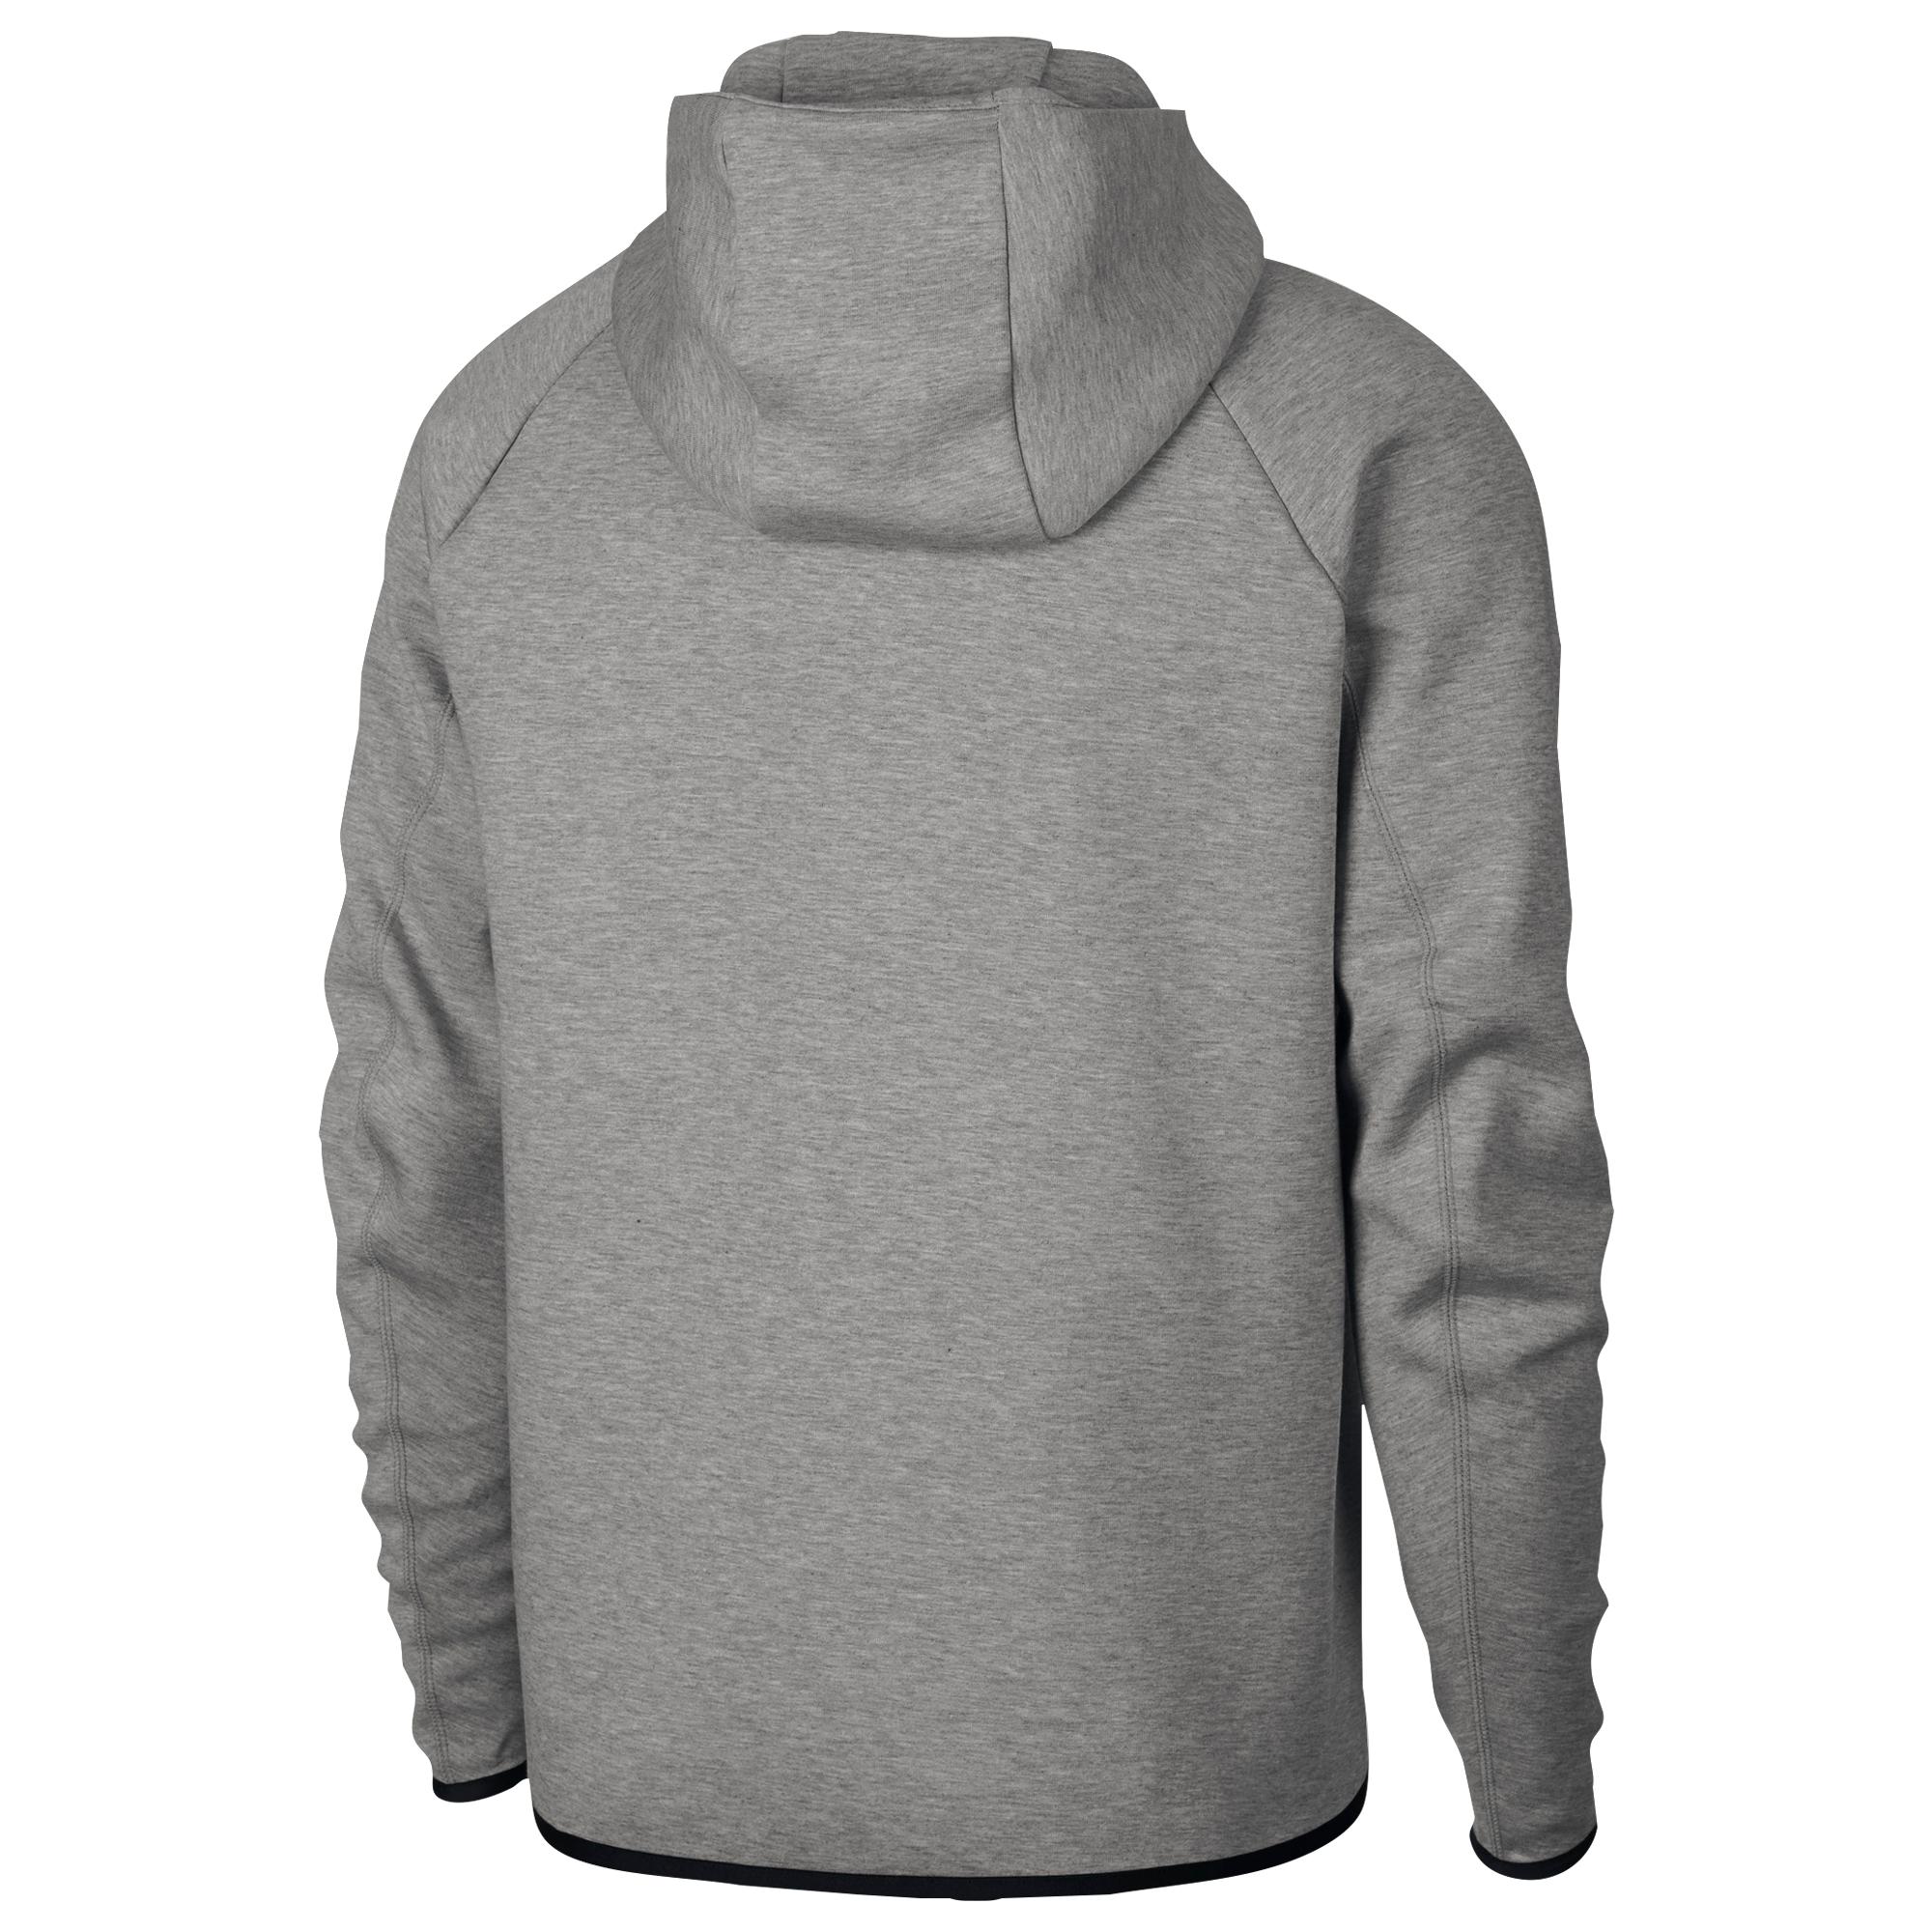 Nike Tech Fleece Full-zip Hoodie in Dark Grey Heather/Black/White (Gray ...